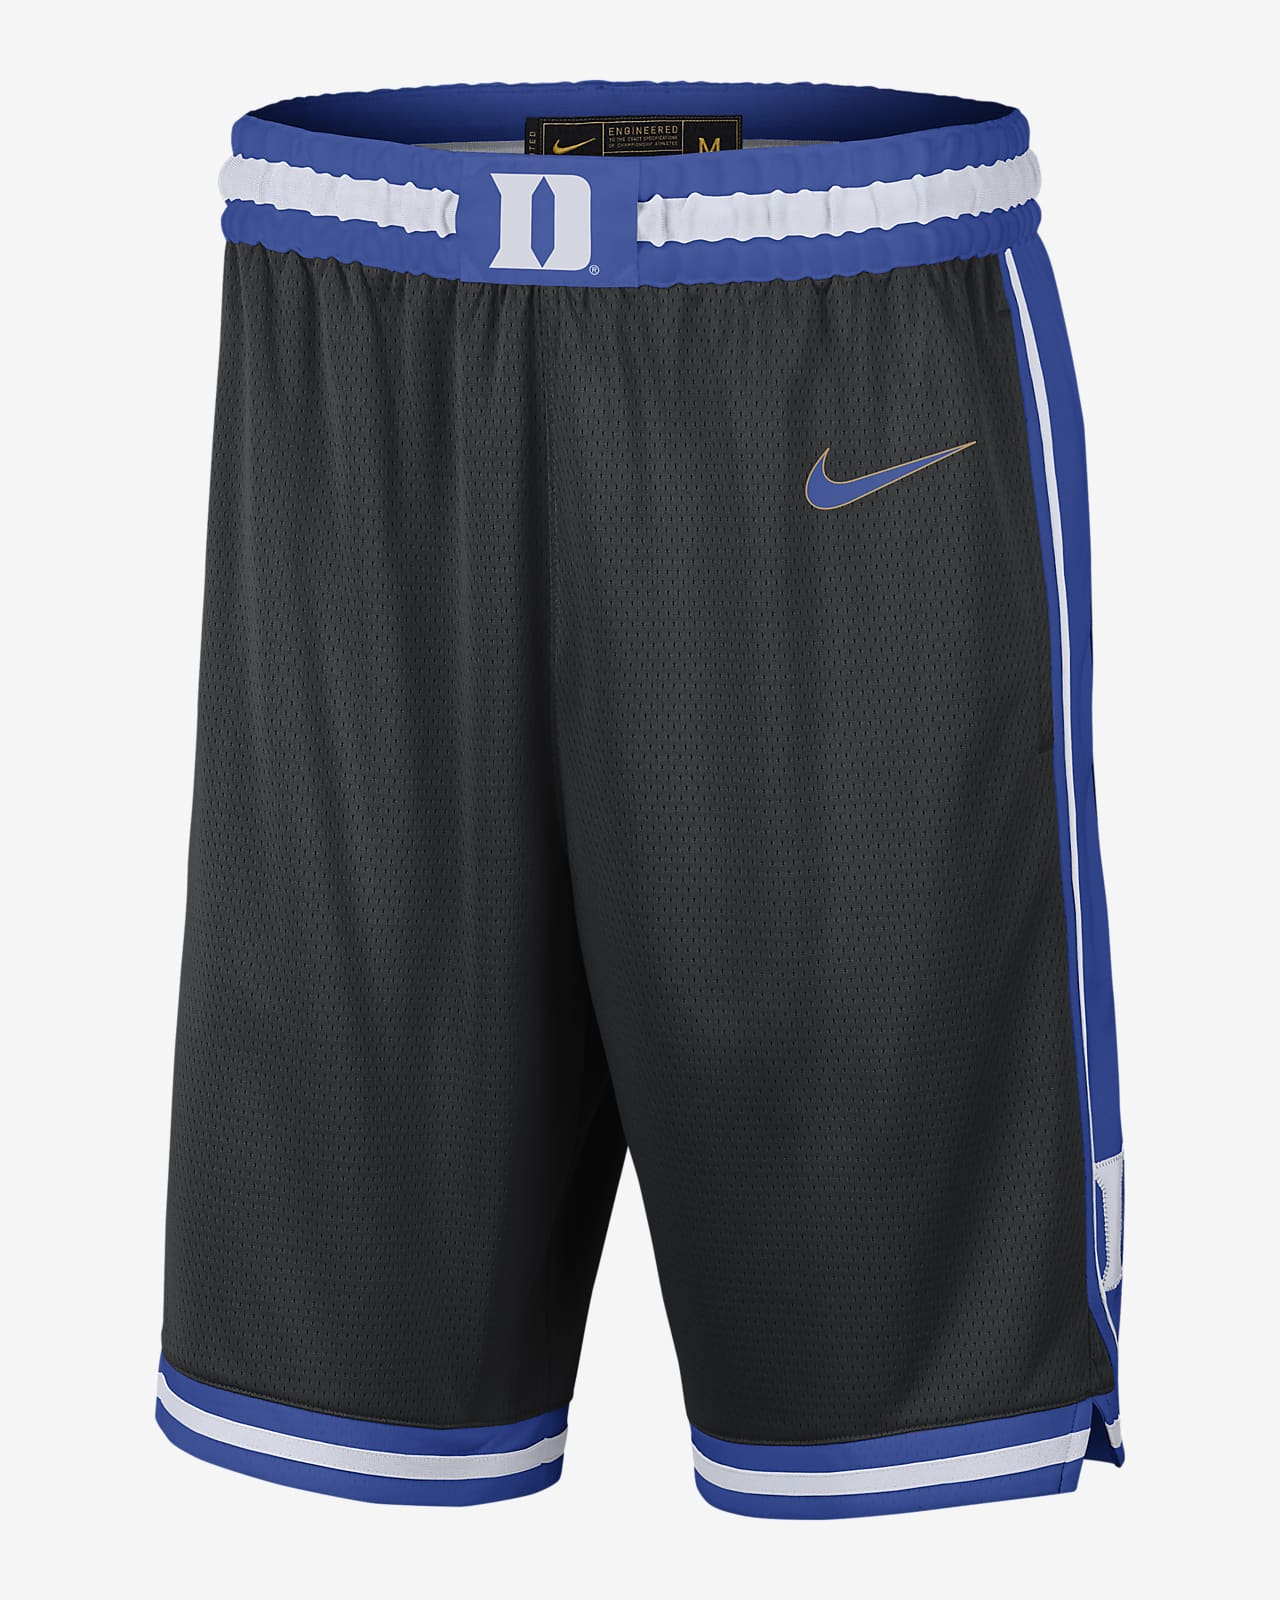 Duke Limited Men's Nike Dri-FIT College Basketball Shorts